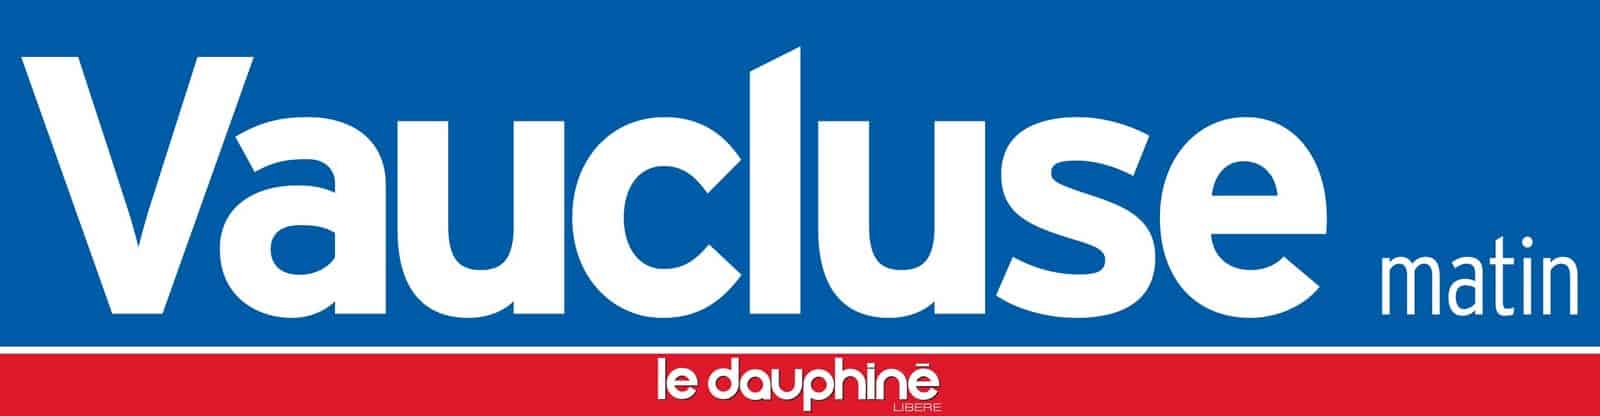 Vaucluse matin - Le dauphiné - Logo